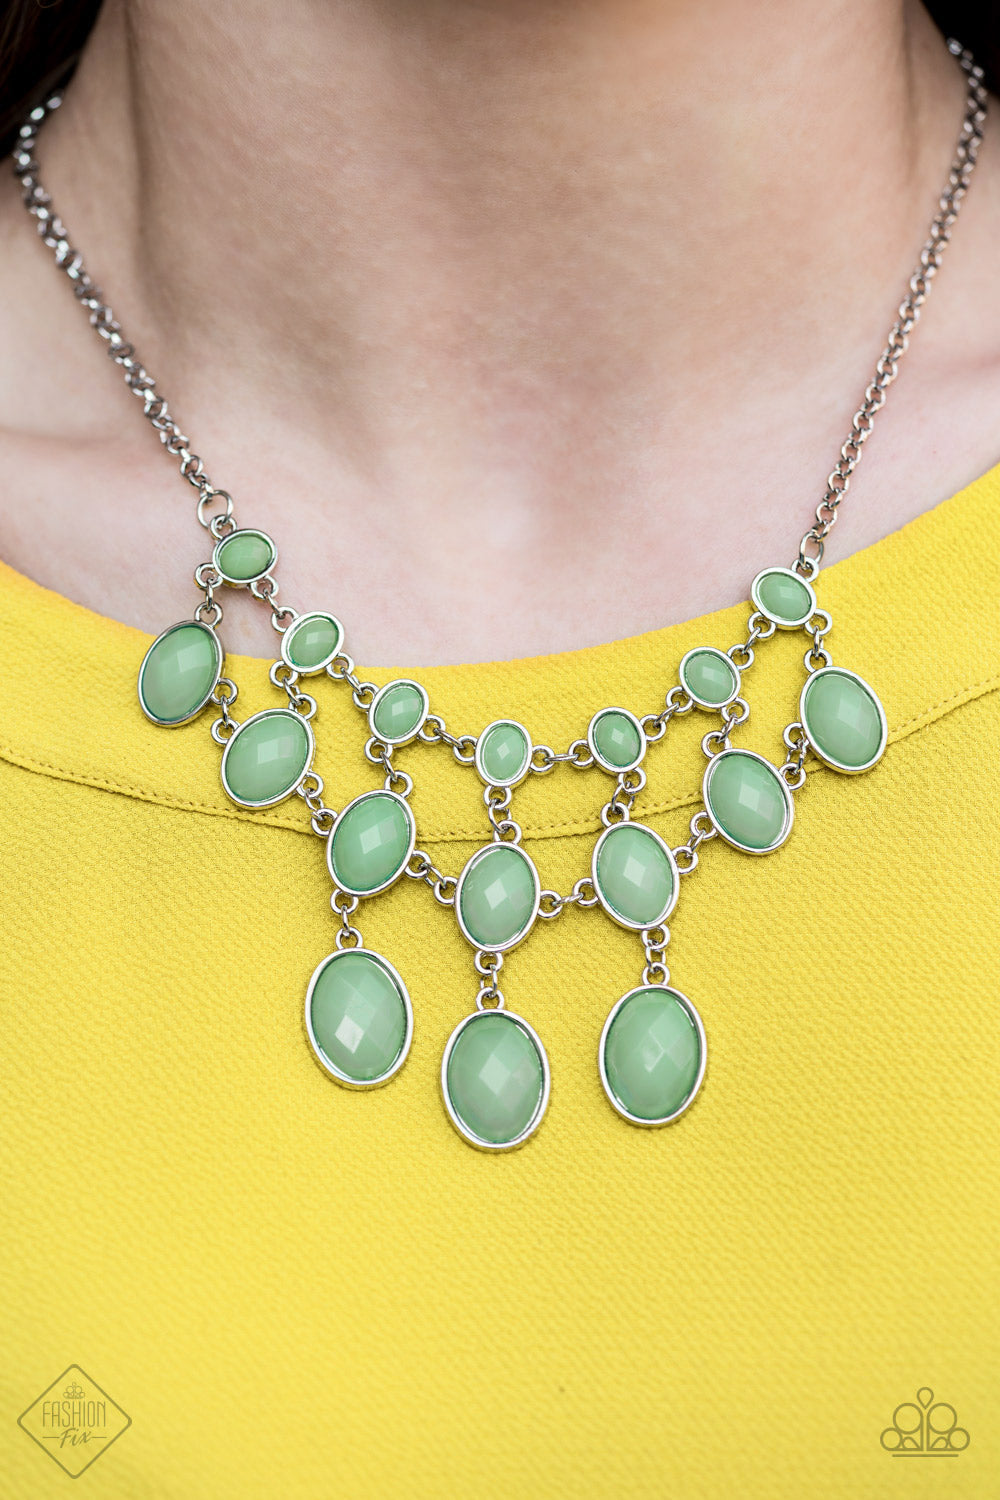 Paparazzi Mermaid Marmalade - Green Spearmint Gems Necklace - Trend Blend Fashion Fix - May 2019 - $5 Jewelry With Ashley Swint